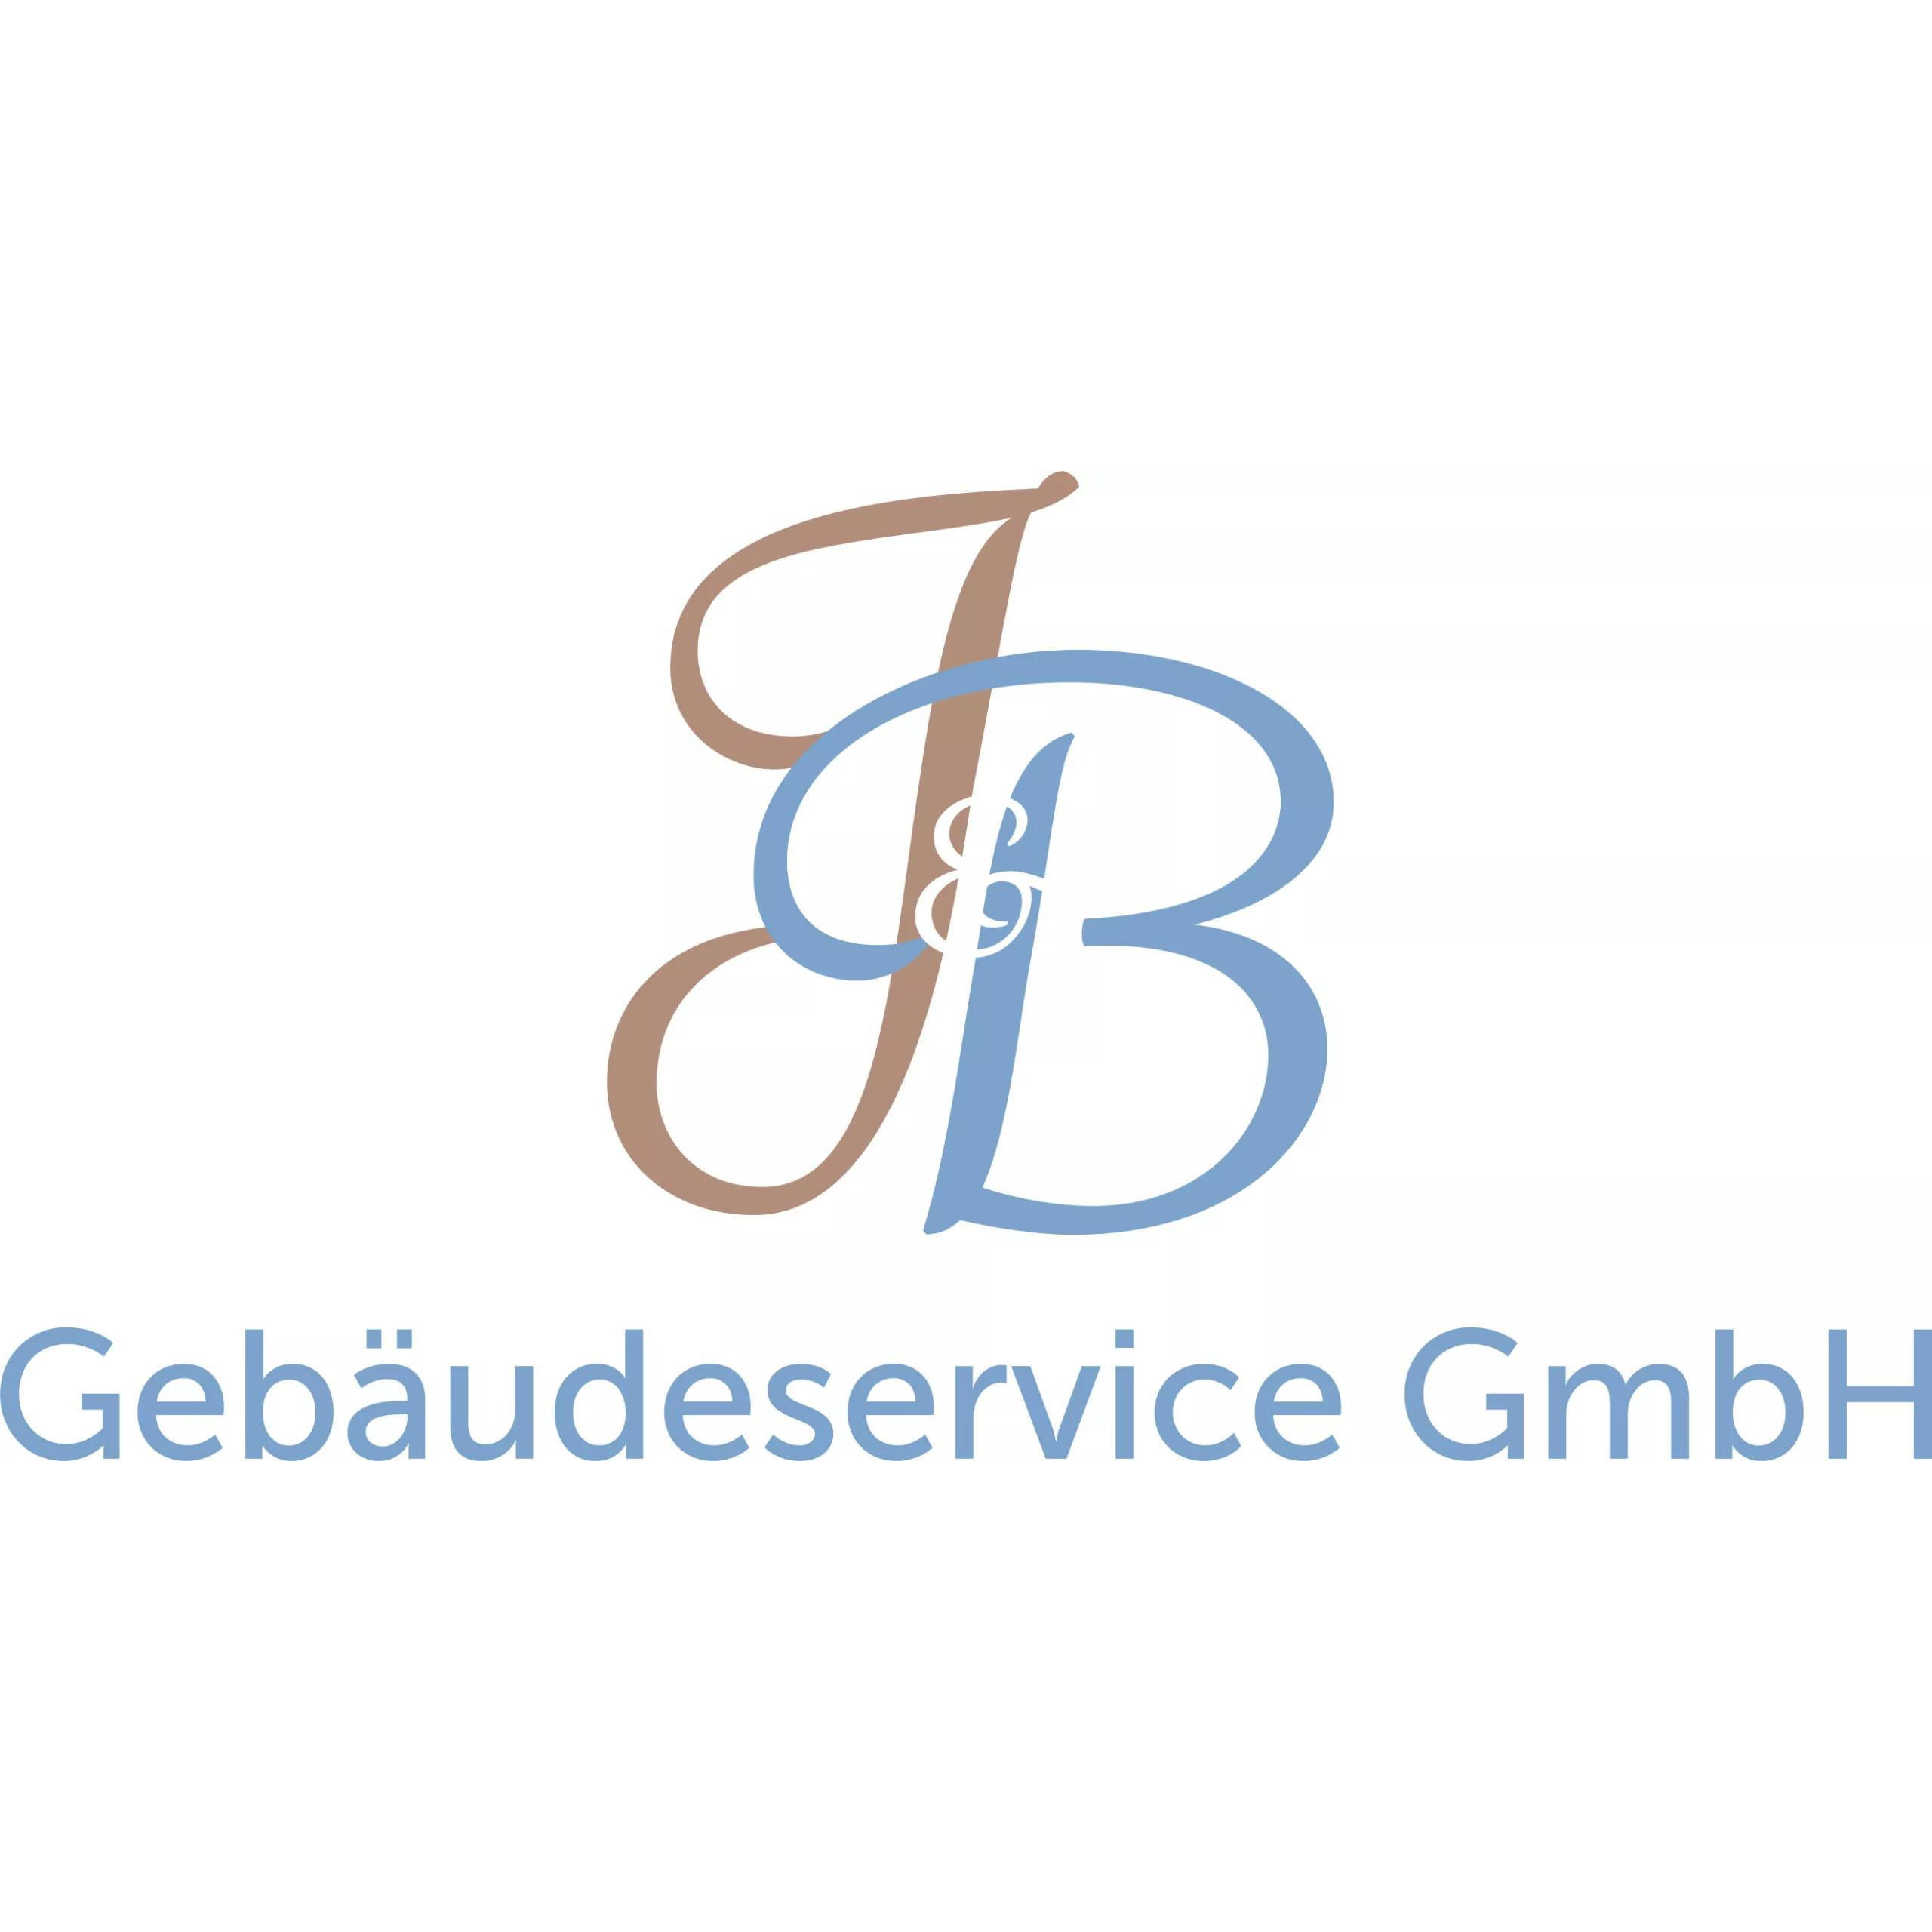 J&B Gebäudeservice GmbH  